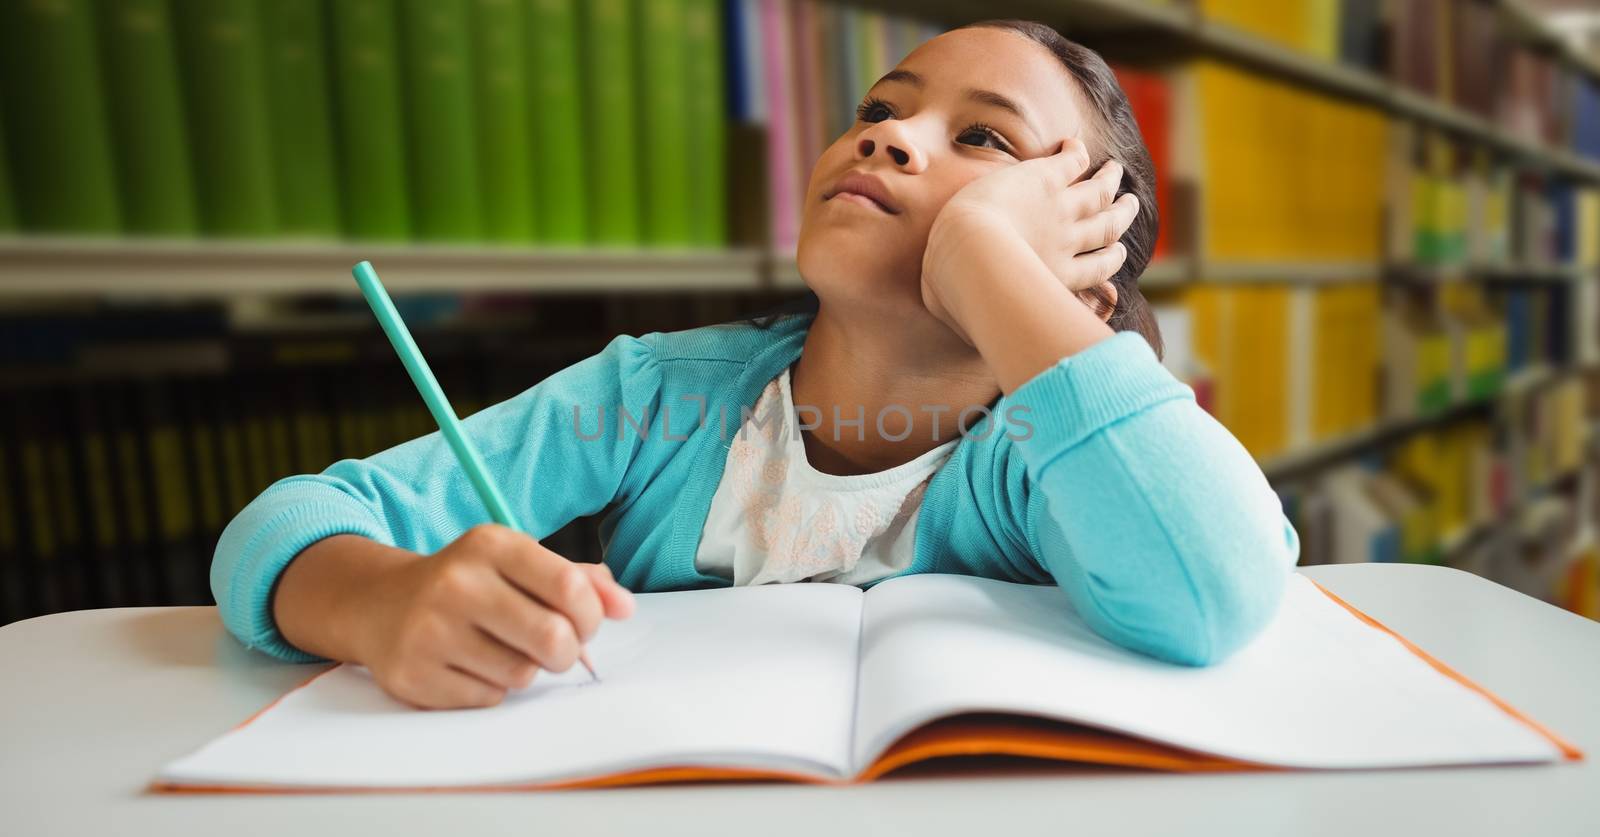 Girl doing schoolwork in education library by Wavebreakmedia